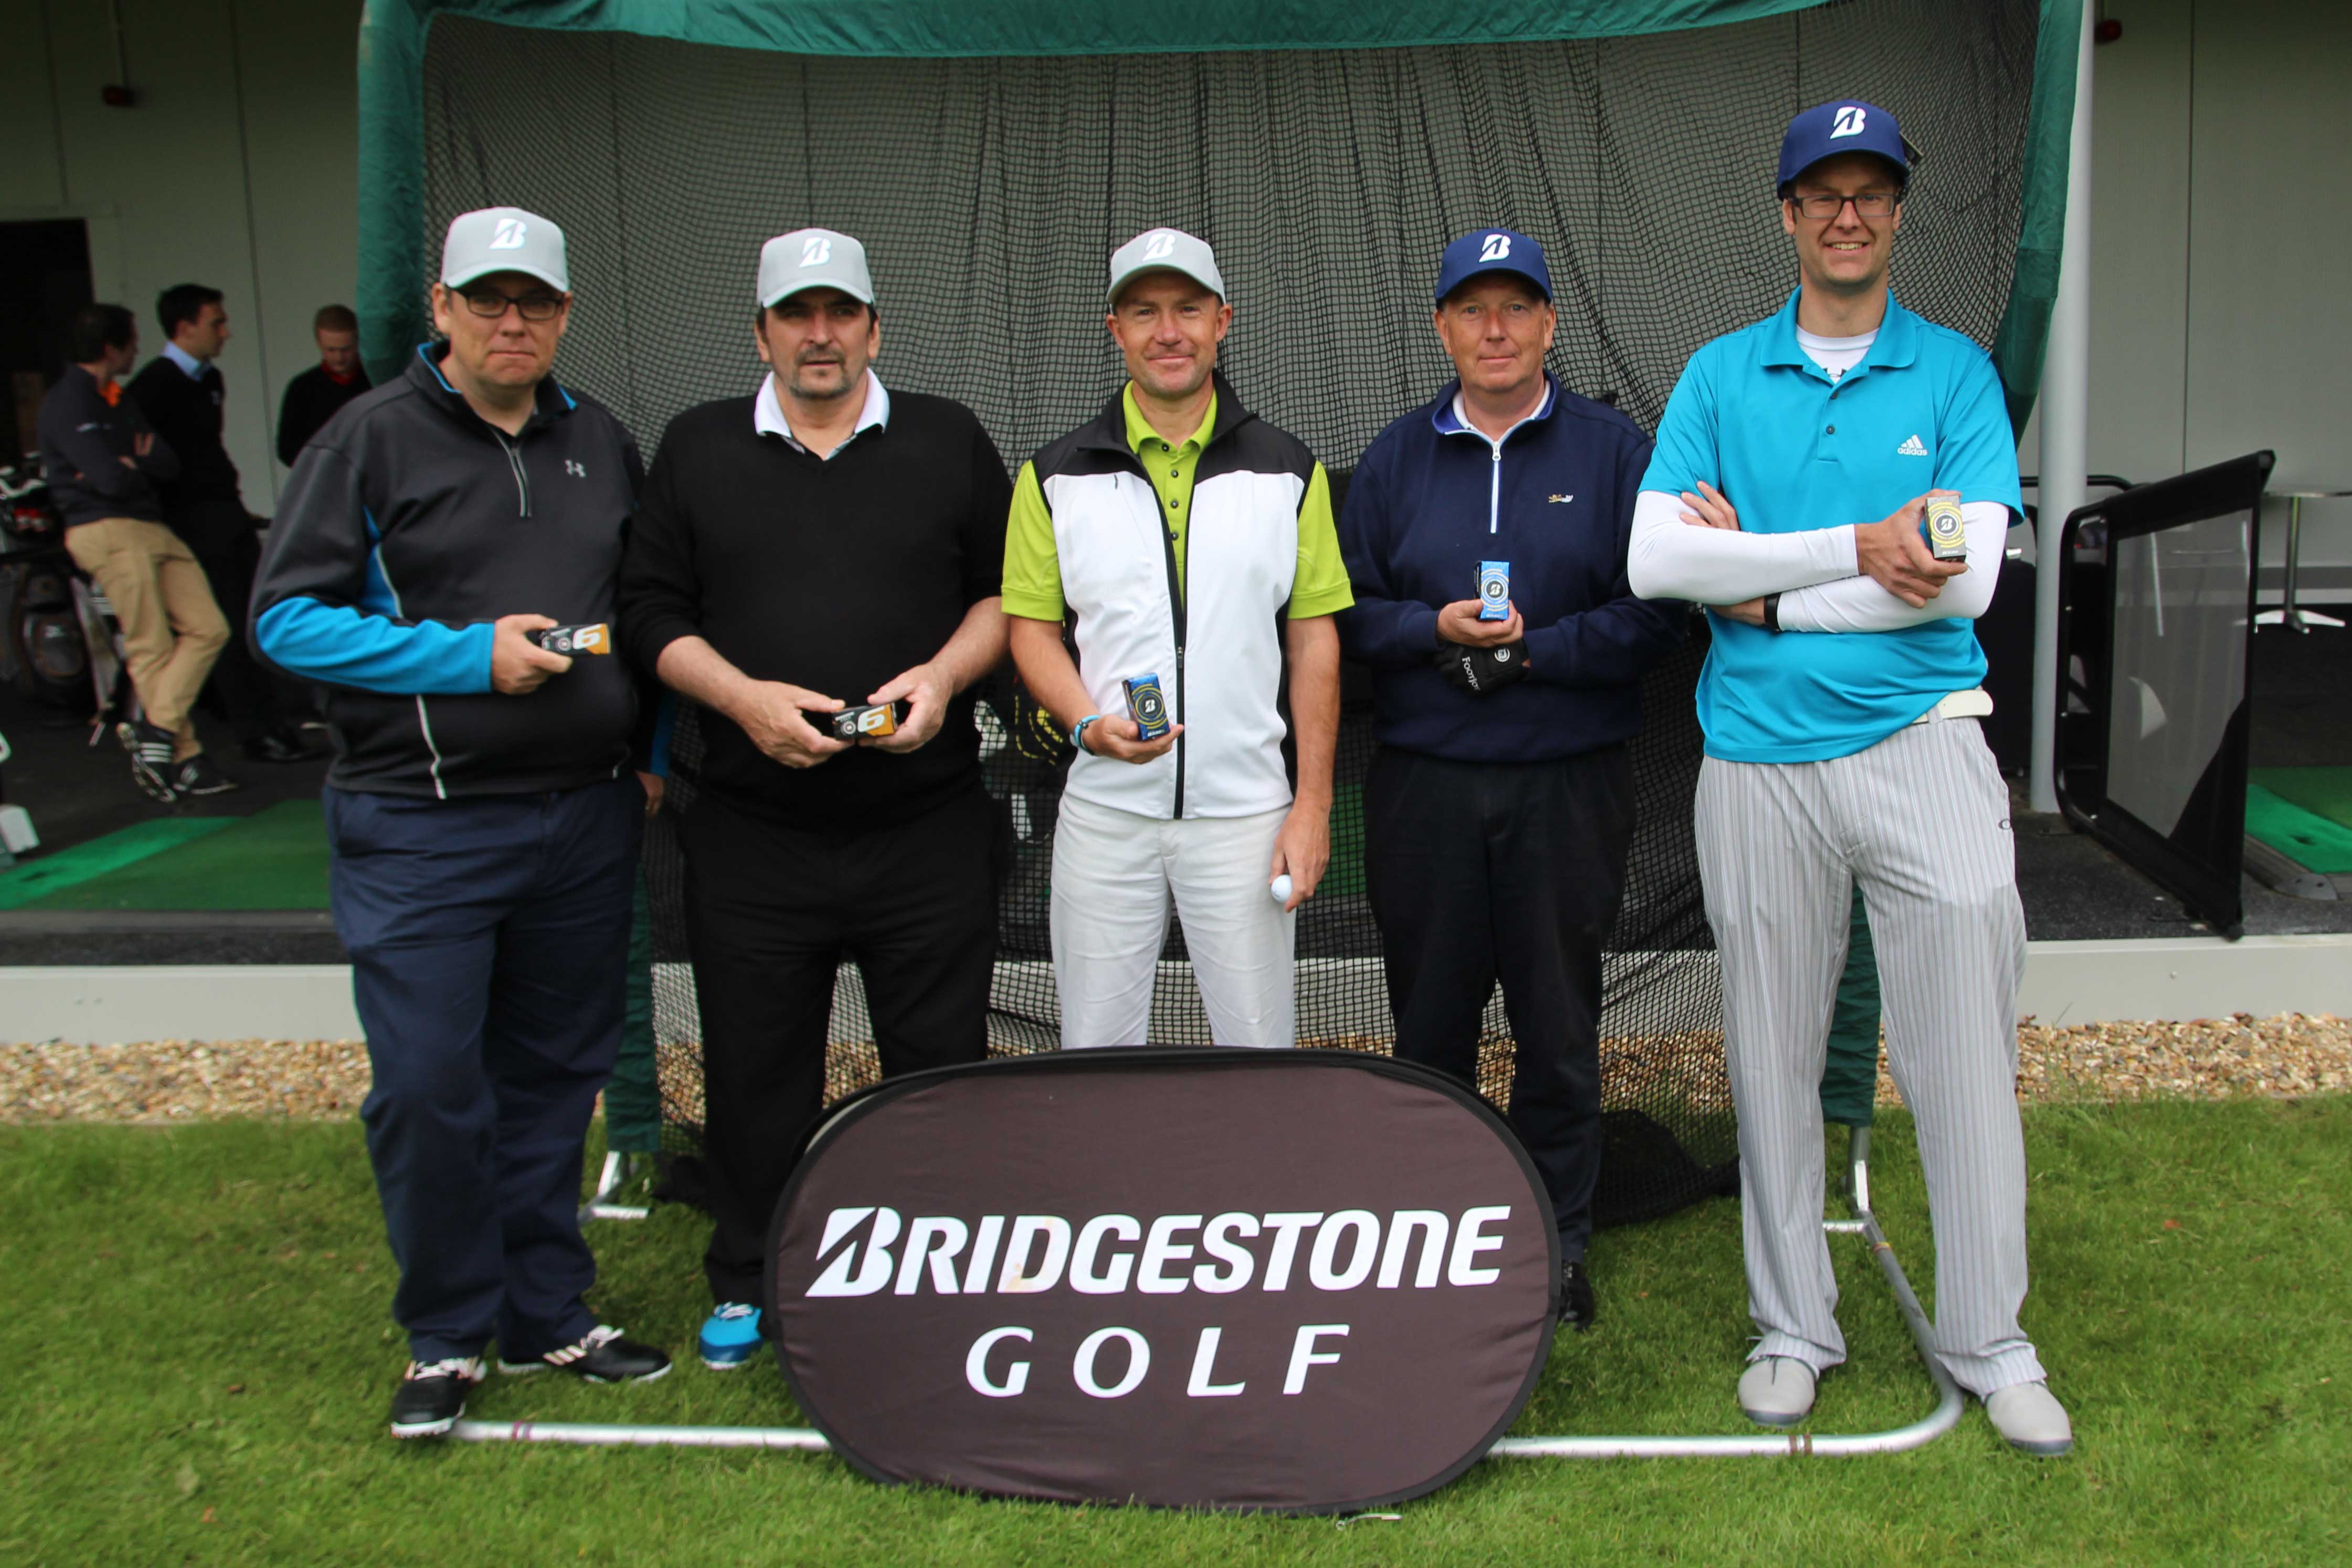 GolfMagic readers take on the Bridgestone Golf Ball Fitting Challenge at Silvermere Golf Club